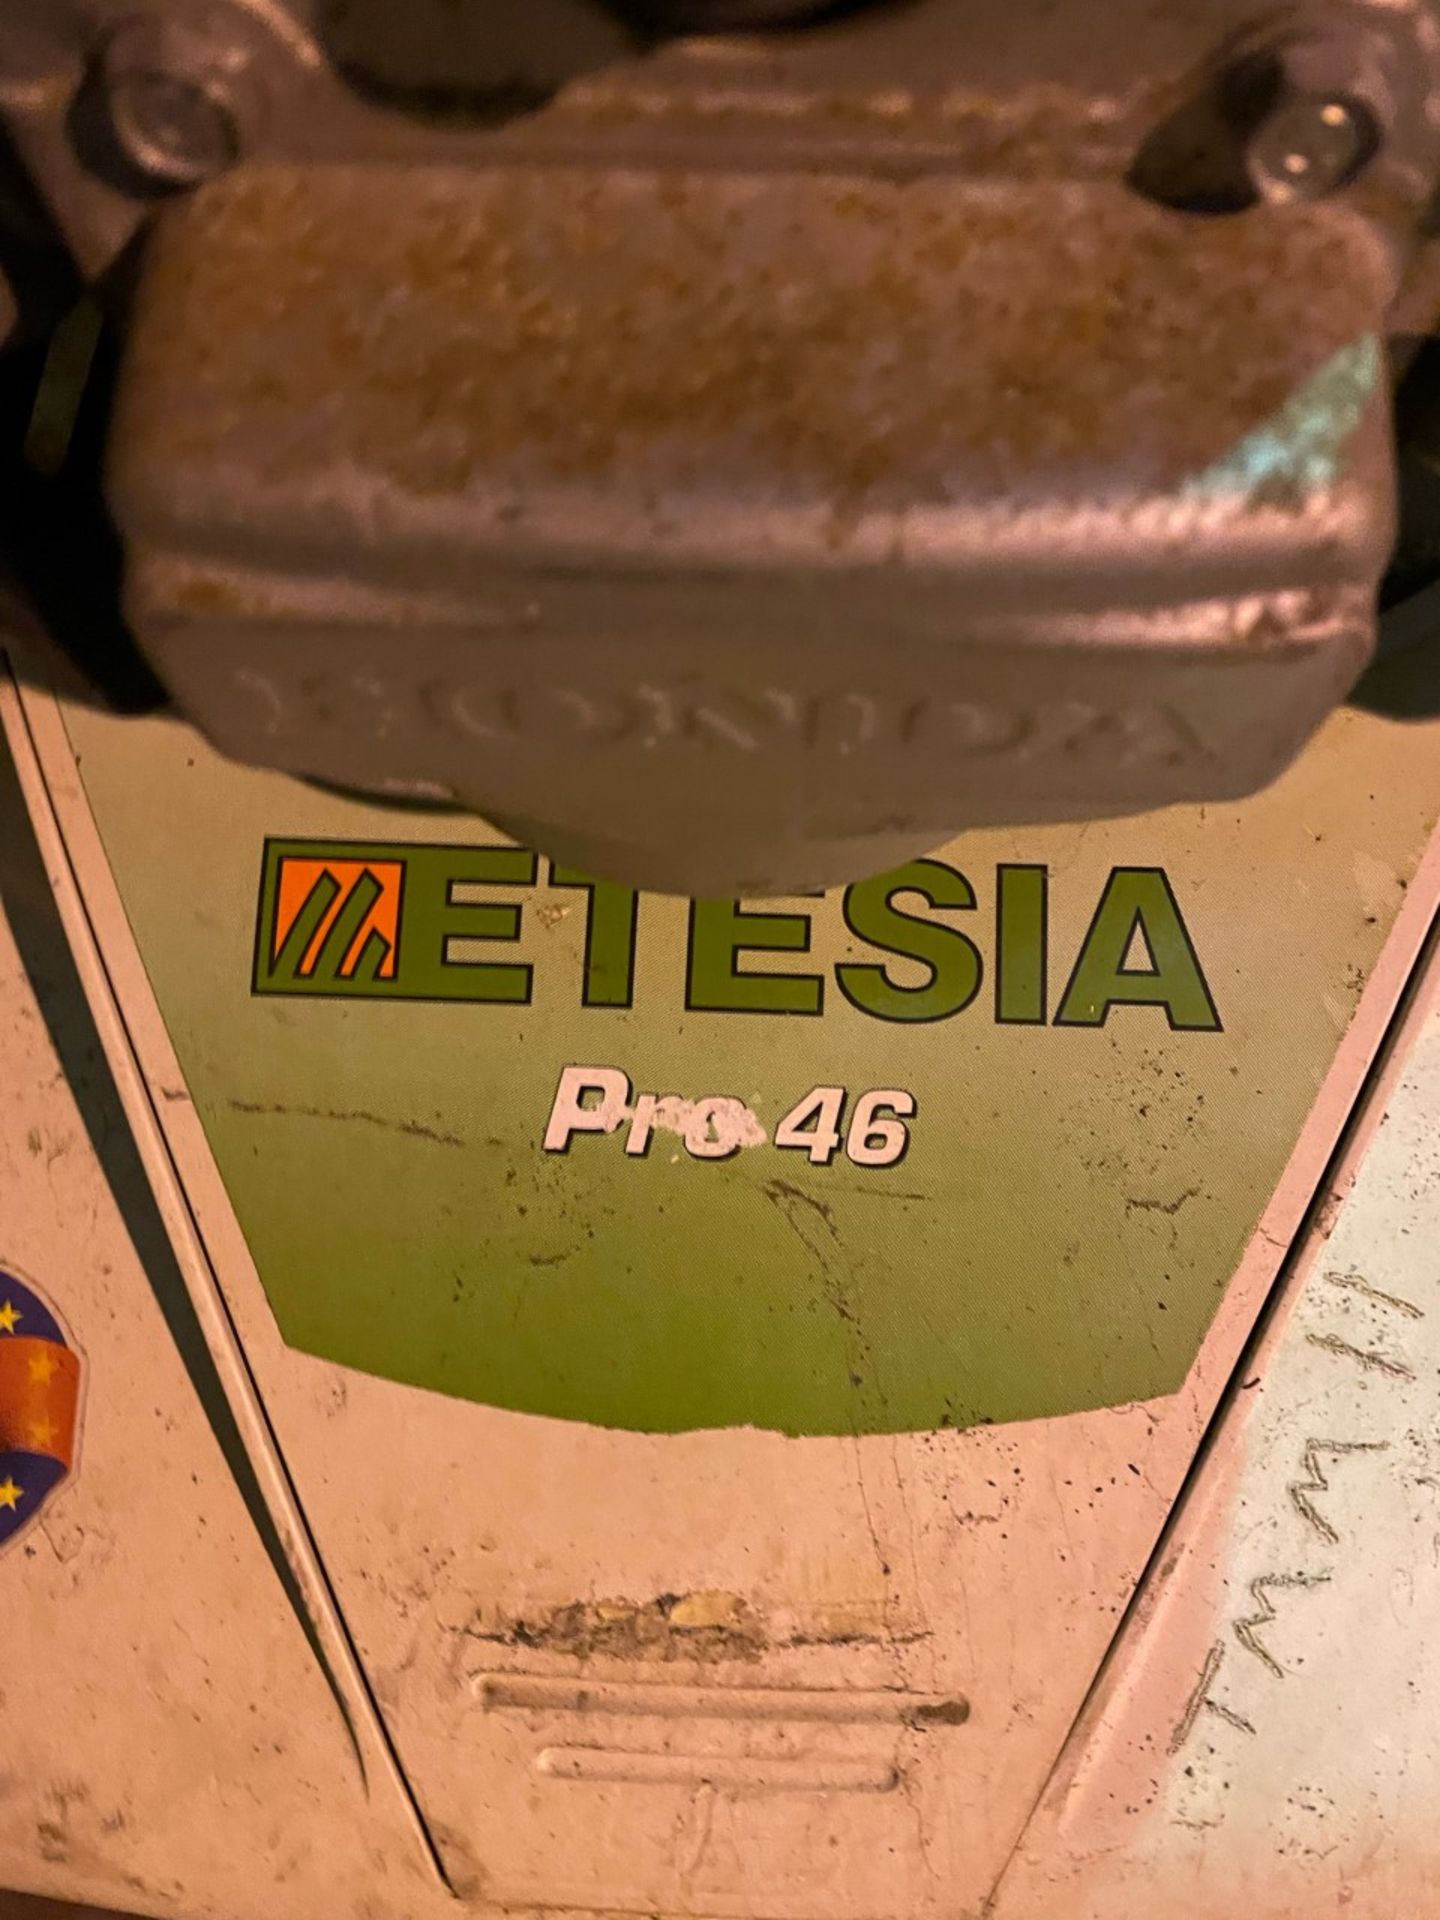 Etisia pro 46 self propelled lawnmower - Image 2 of 3